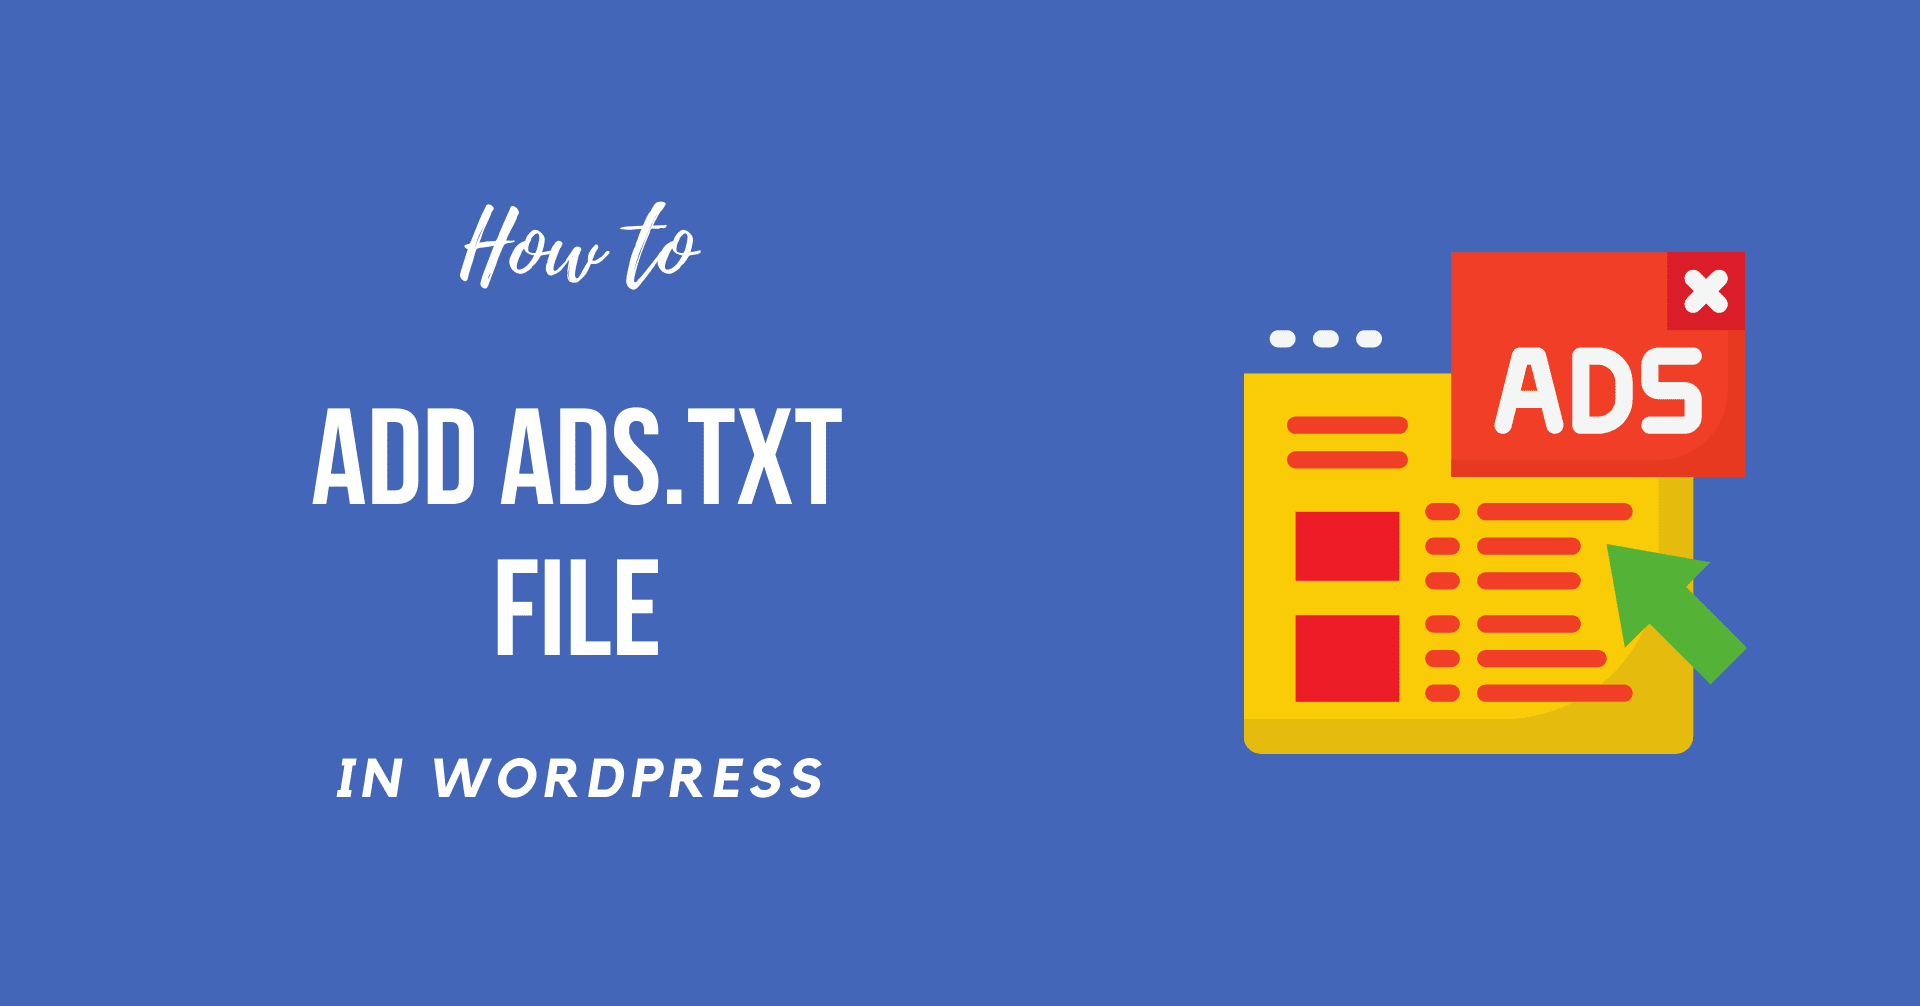 How to Add ads.txt File in WordPress